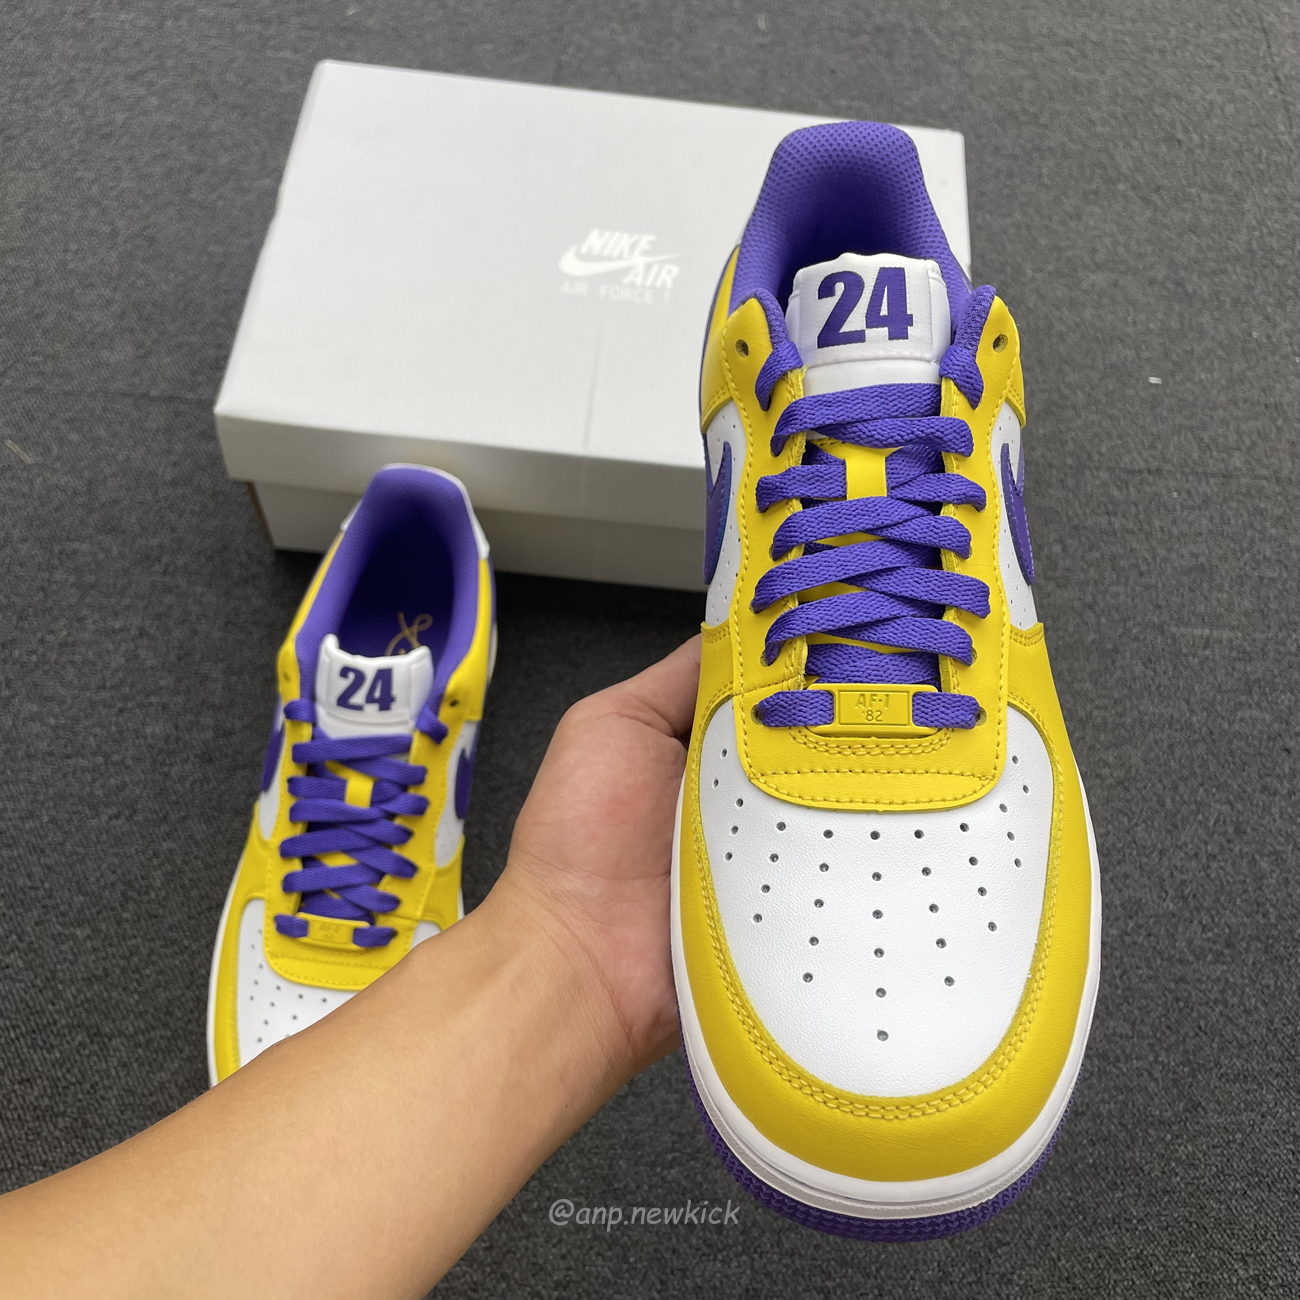 Kobe Bryant X Nike Air Force 1 Low Purple Gold Color (9) - newkick.org